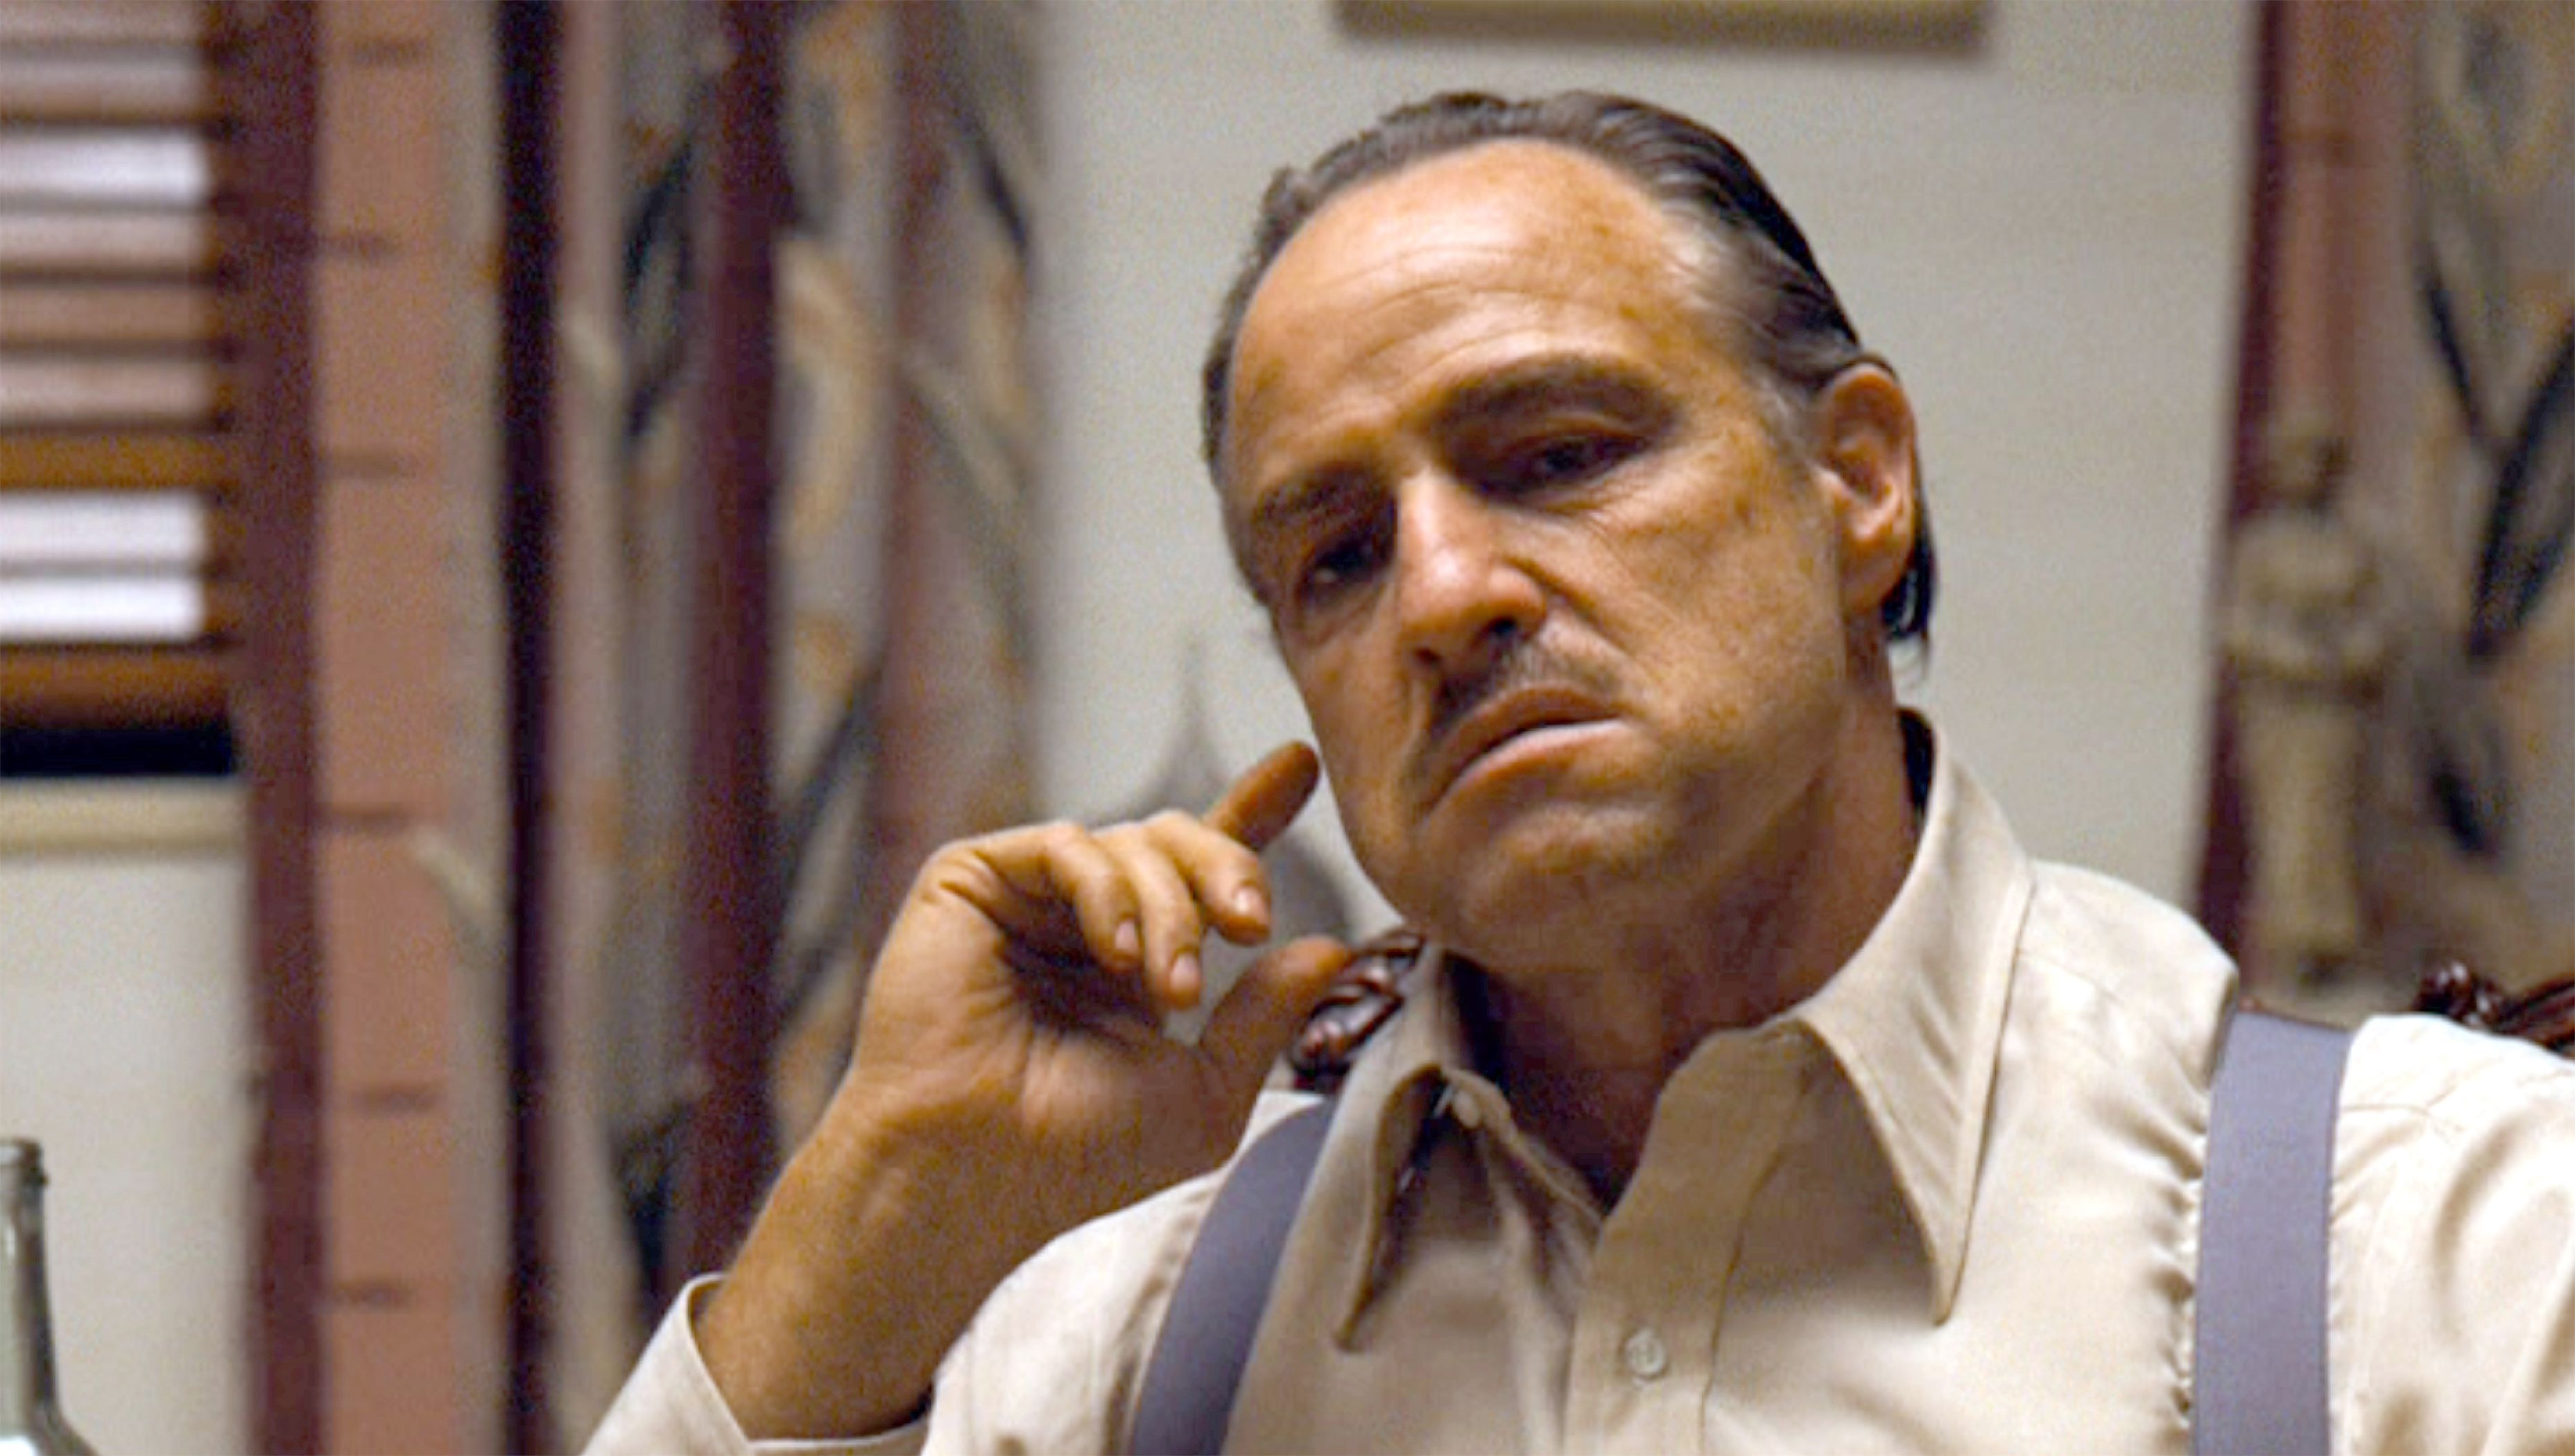 A portrait of Marlon Brando as Vito Corleone in "The Godfather" on March 15, 1972 | Photo: Getty Images